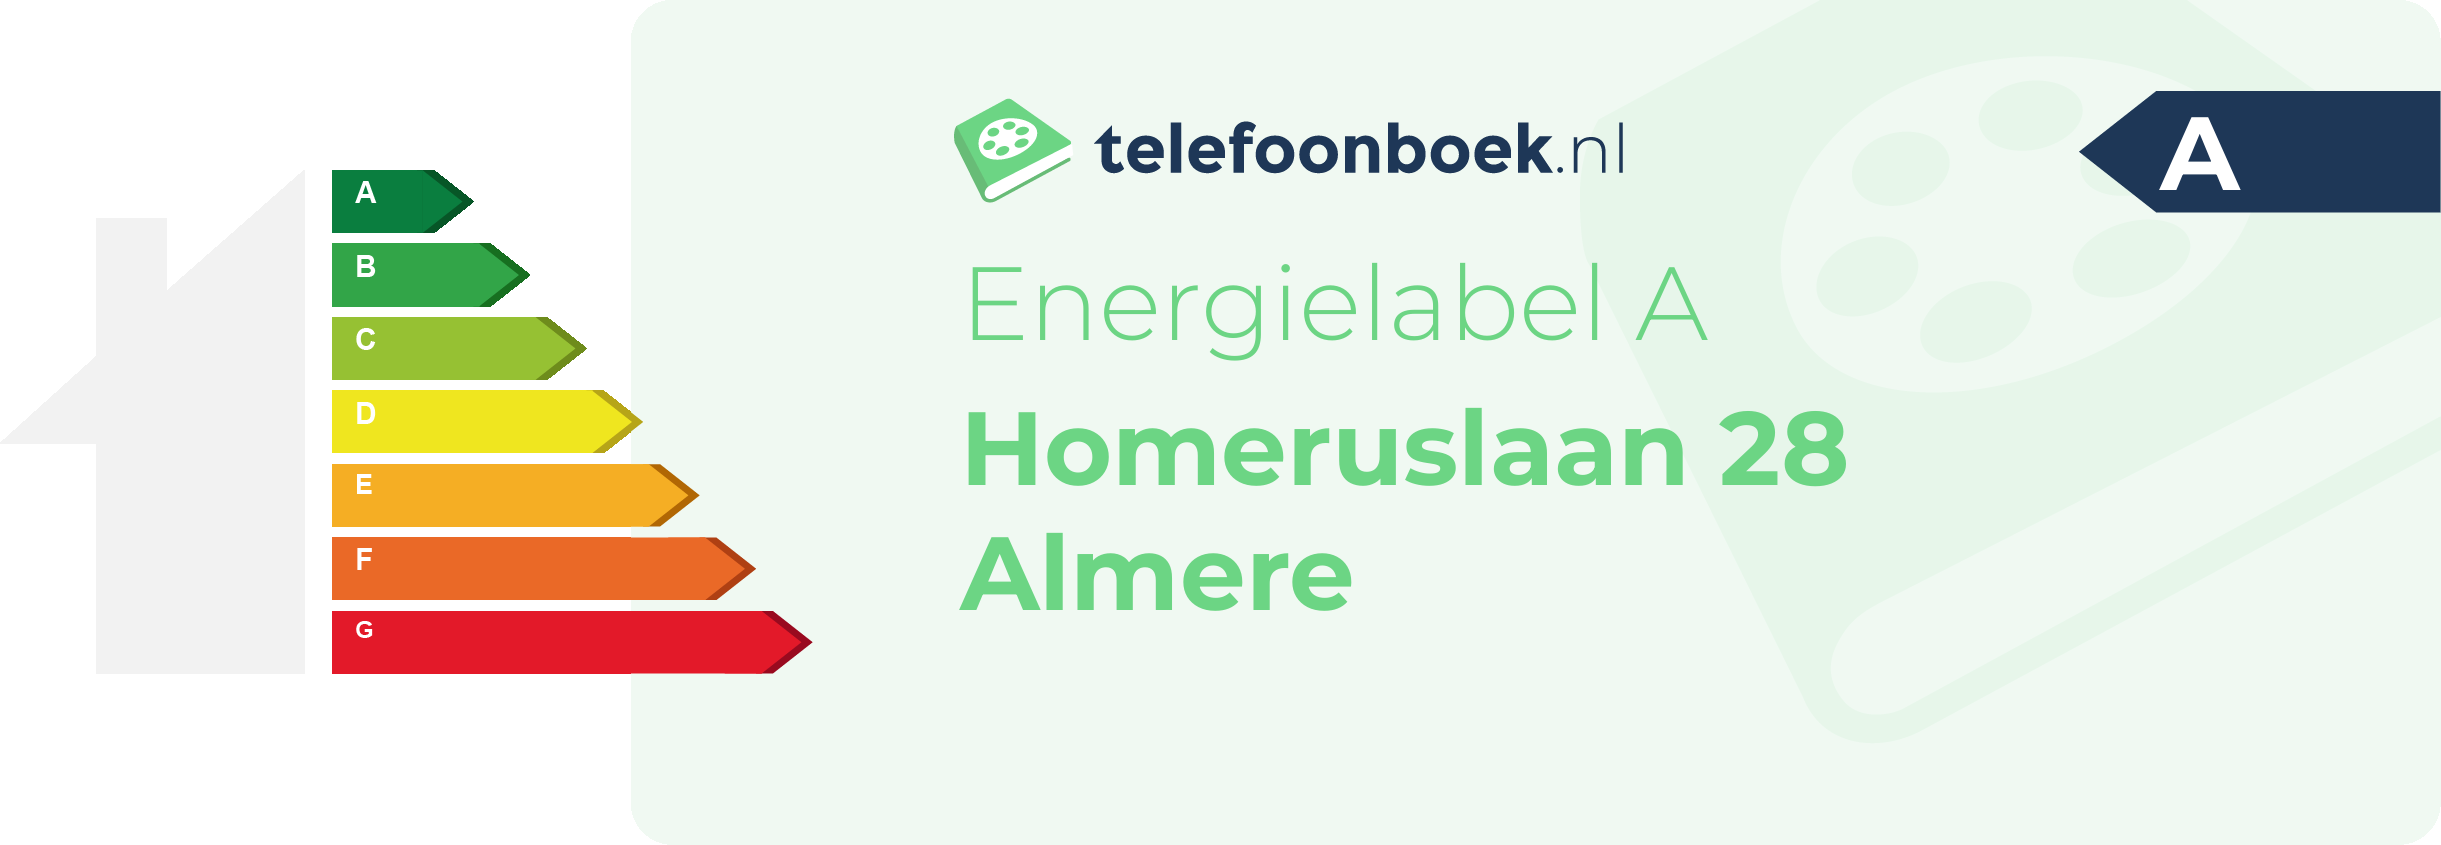 Energielabel Homeruslaan 28 Almere